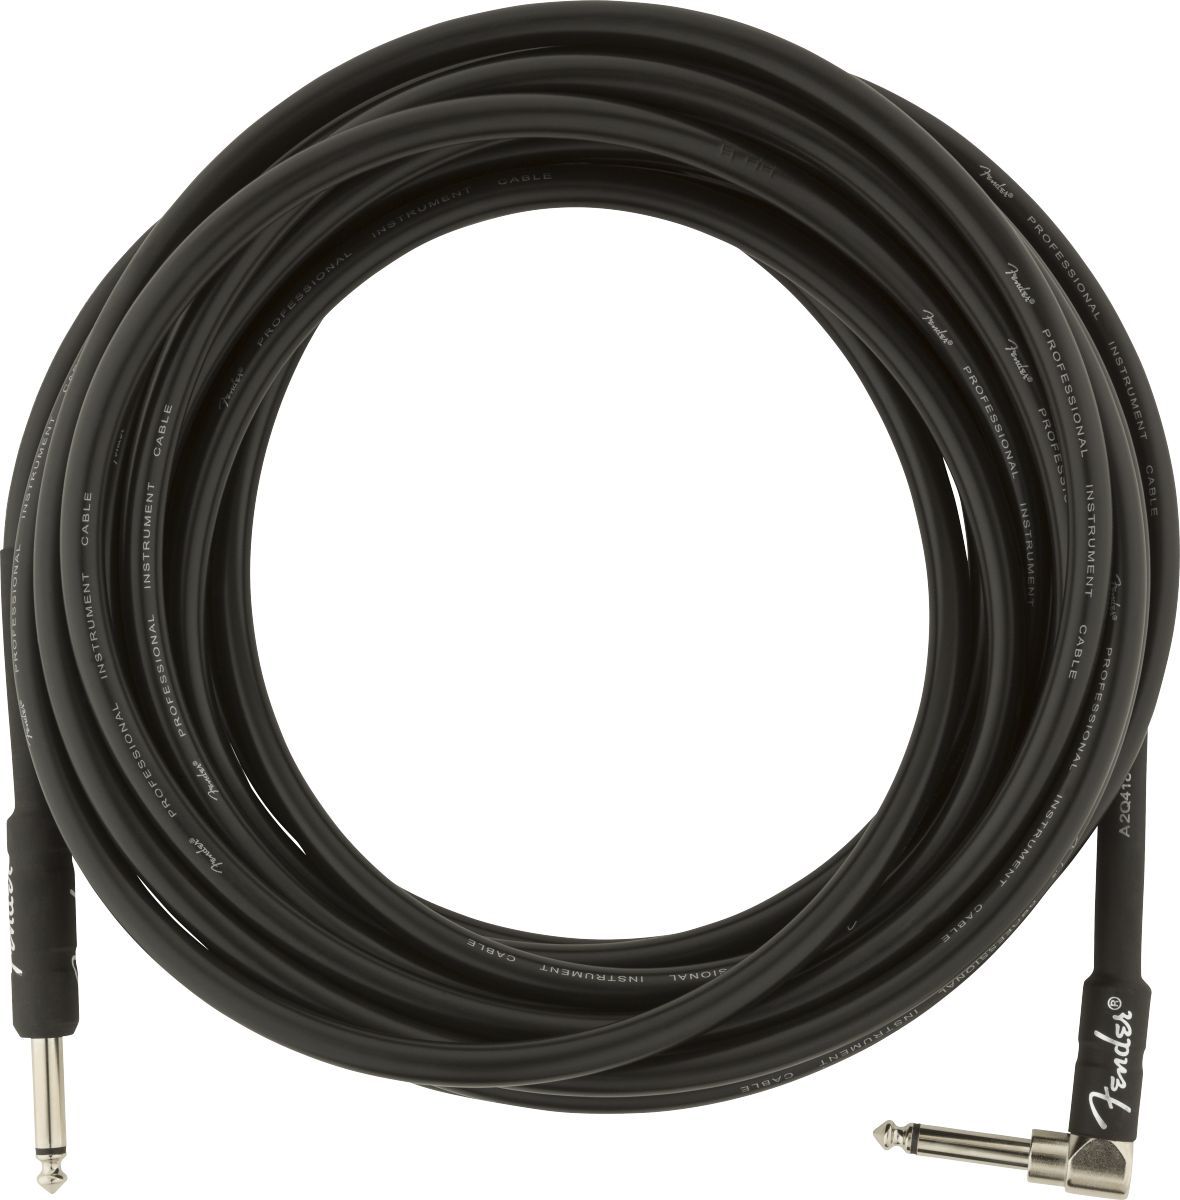 Fender Professional Series Instrument Cables Black